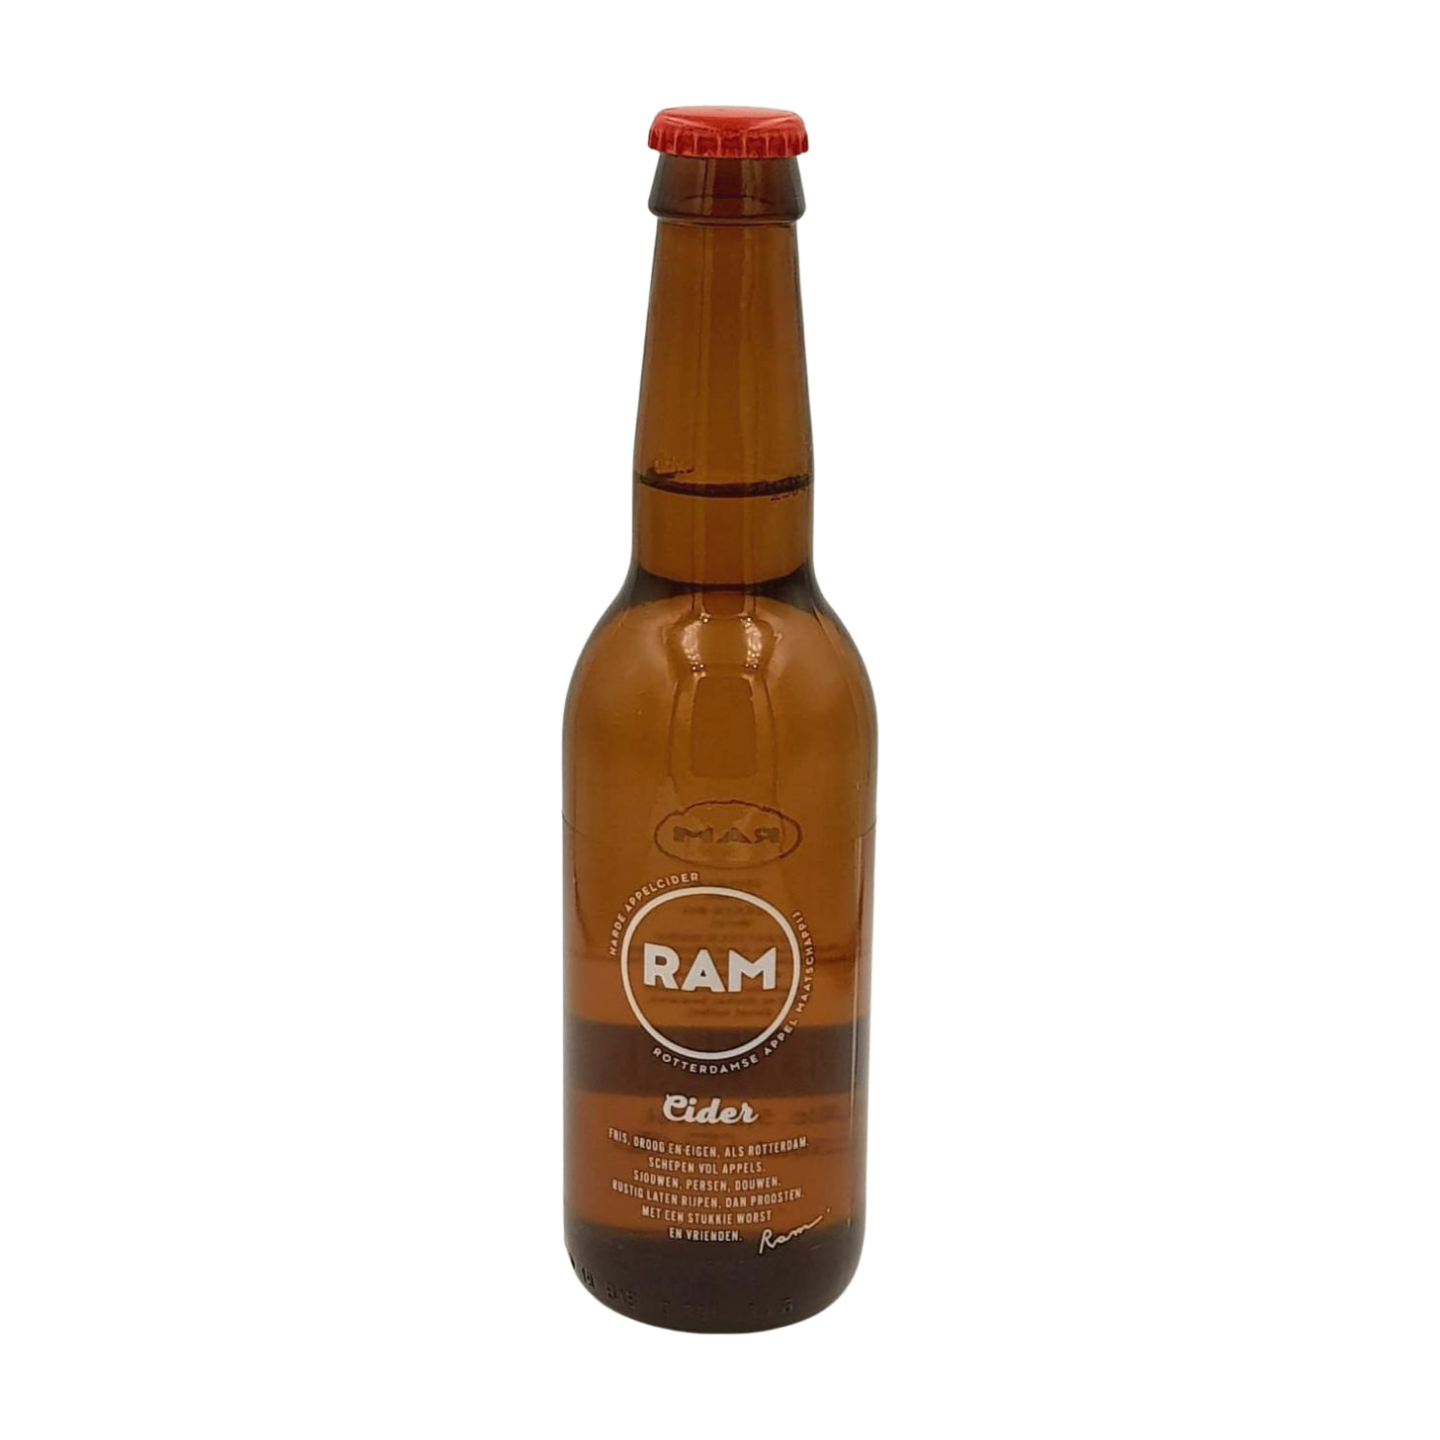 Rotterdamse Appel Maatschappij RAM | Cider Webshop Online Verdins Bierwinkel Rotterdam